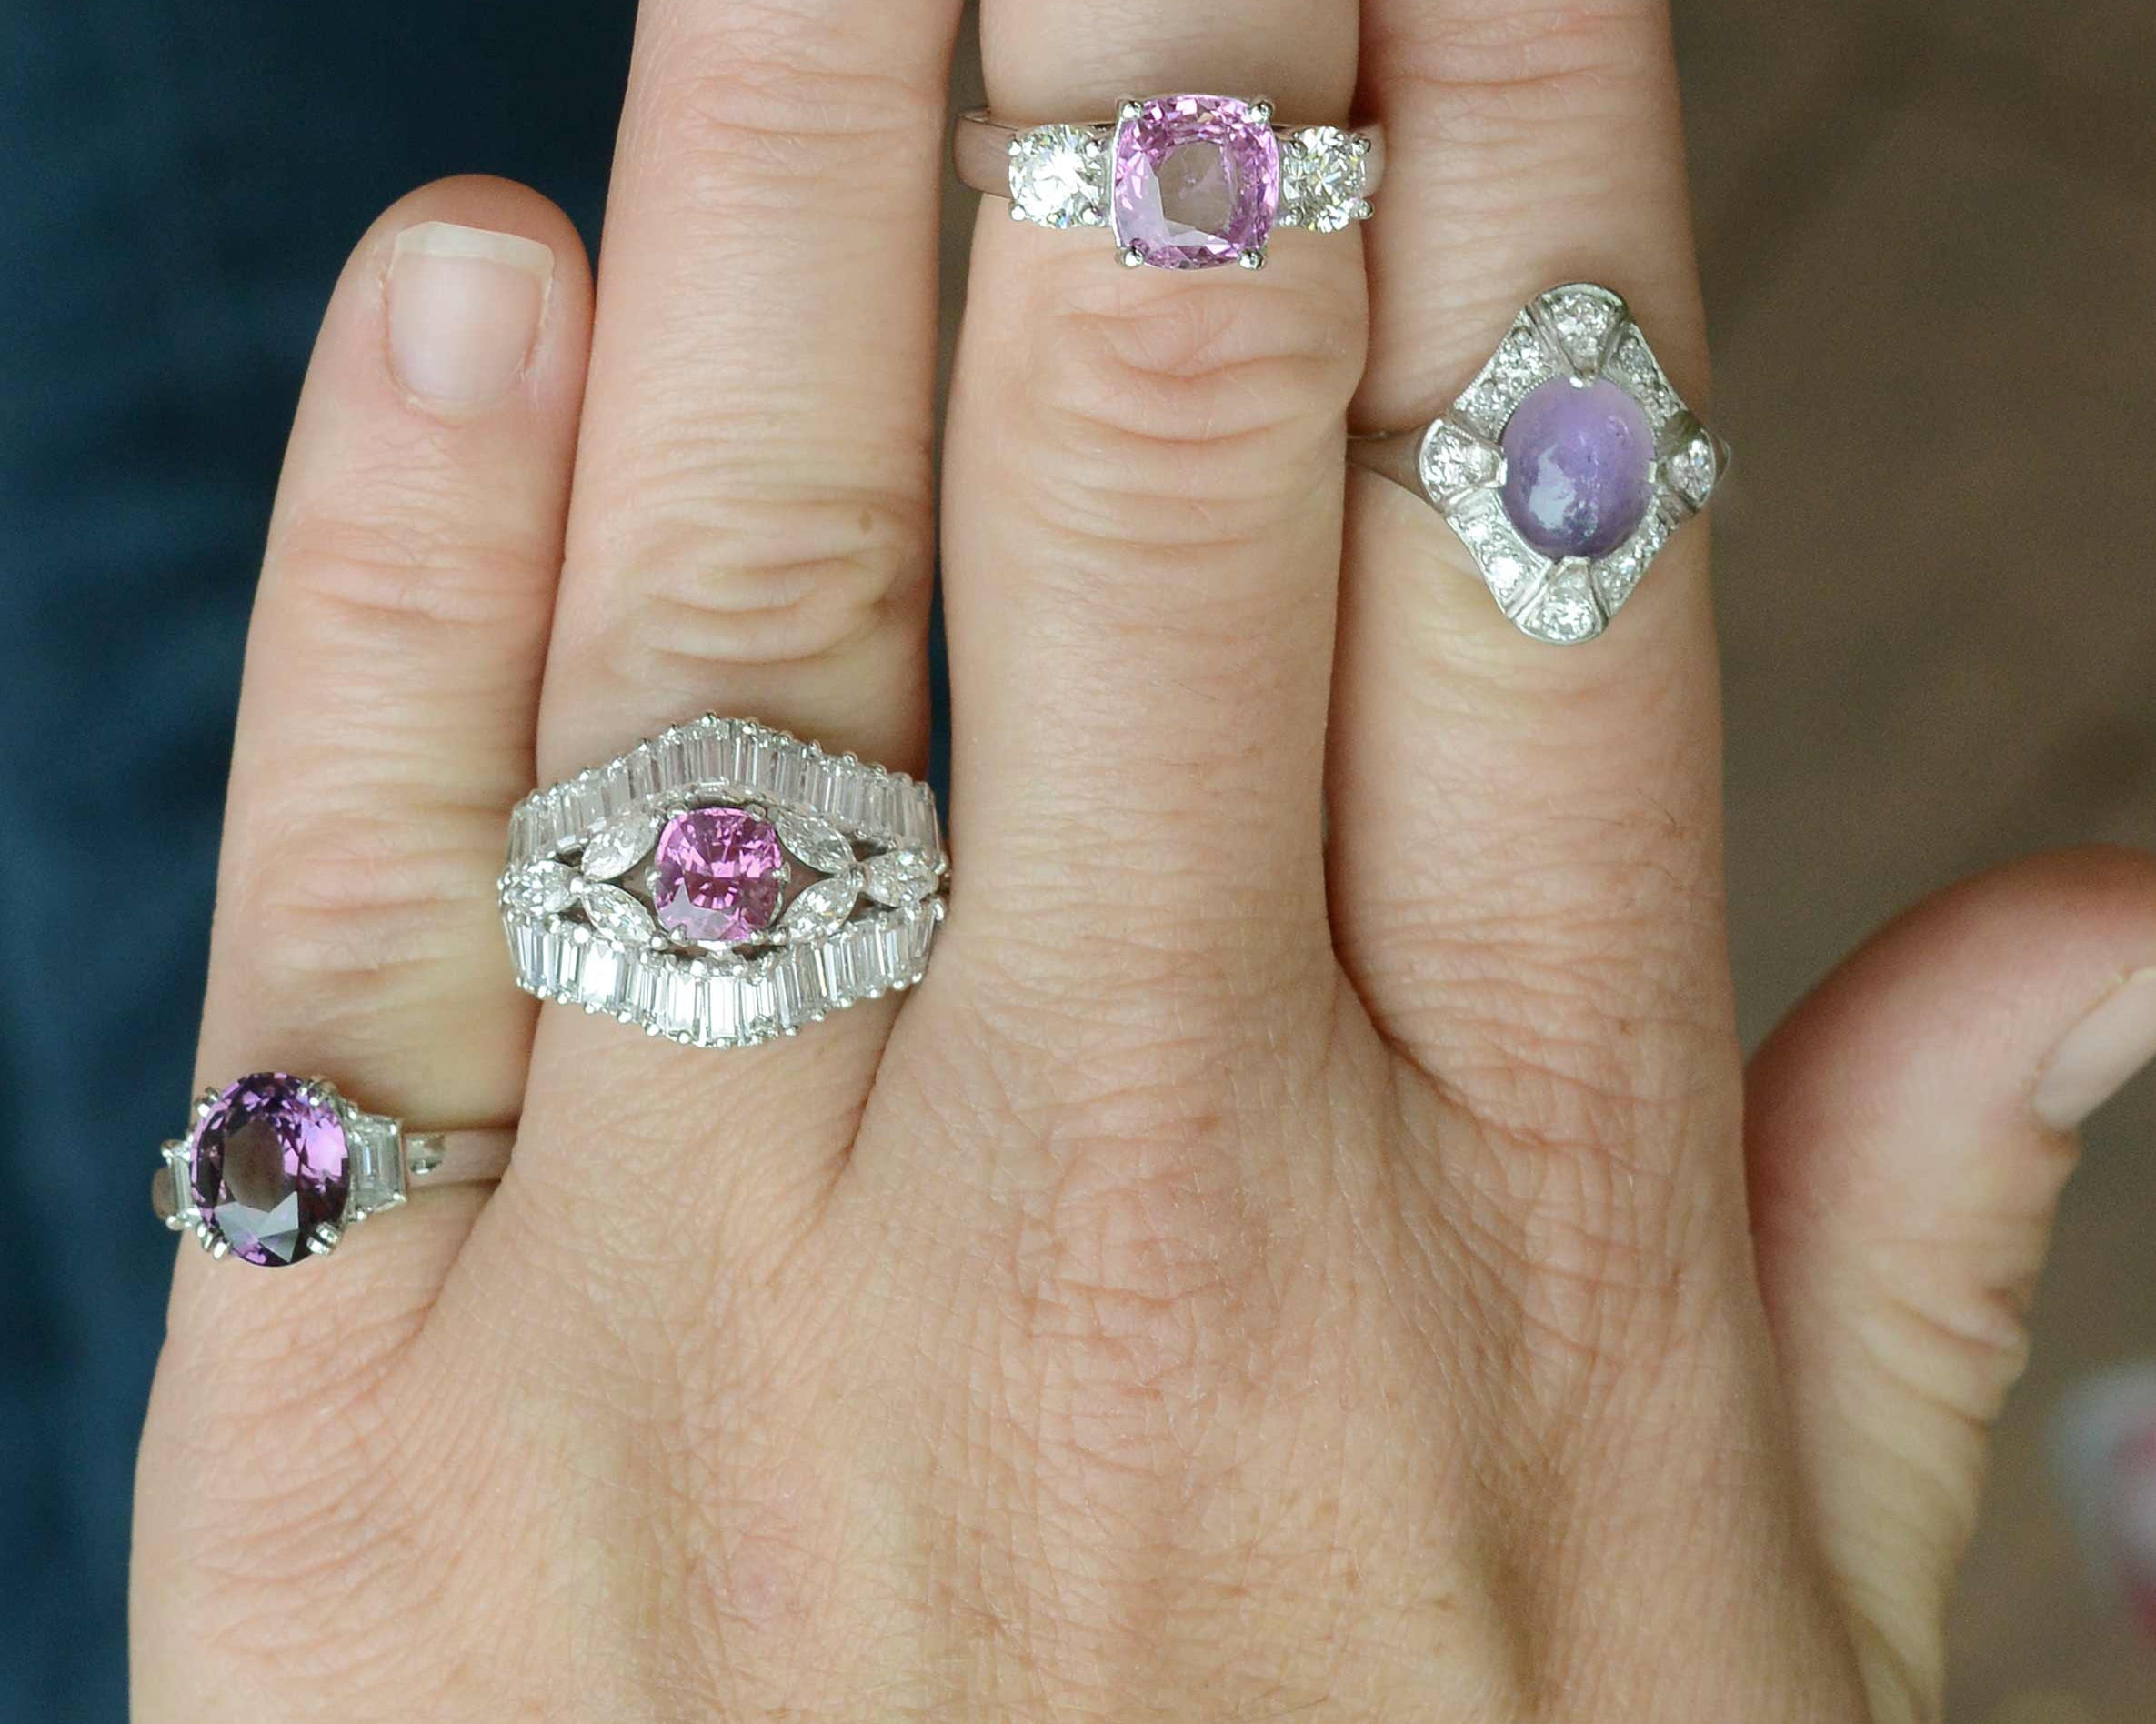 Pinkish purple sapphire with diamonds, 3 stone engagement rings.